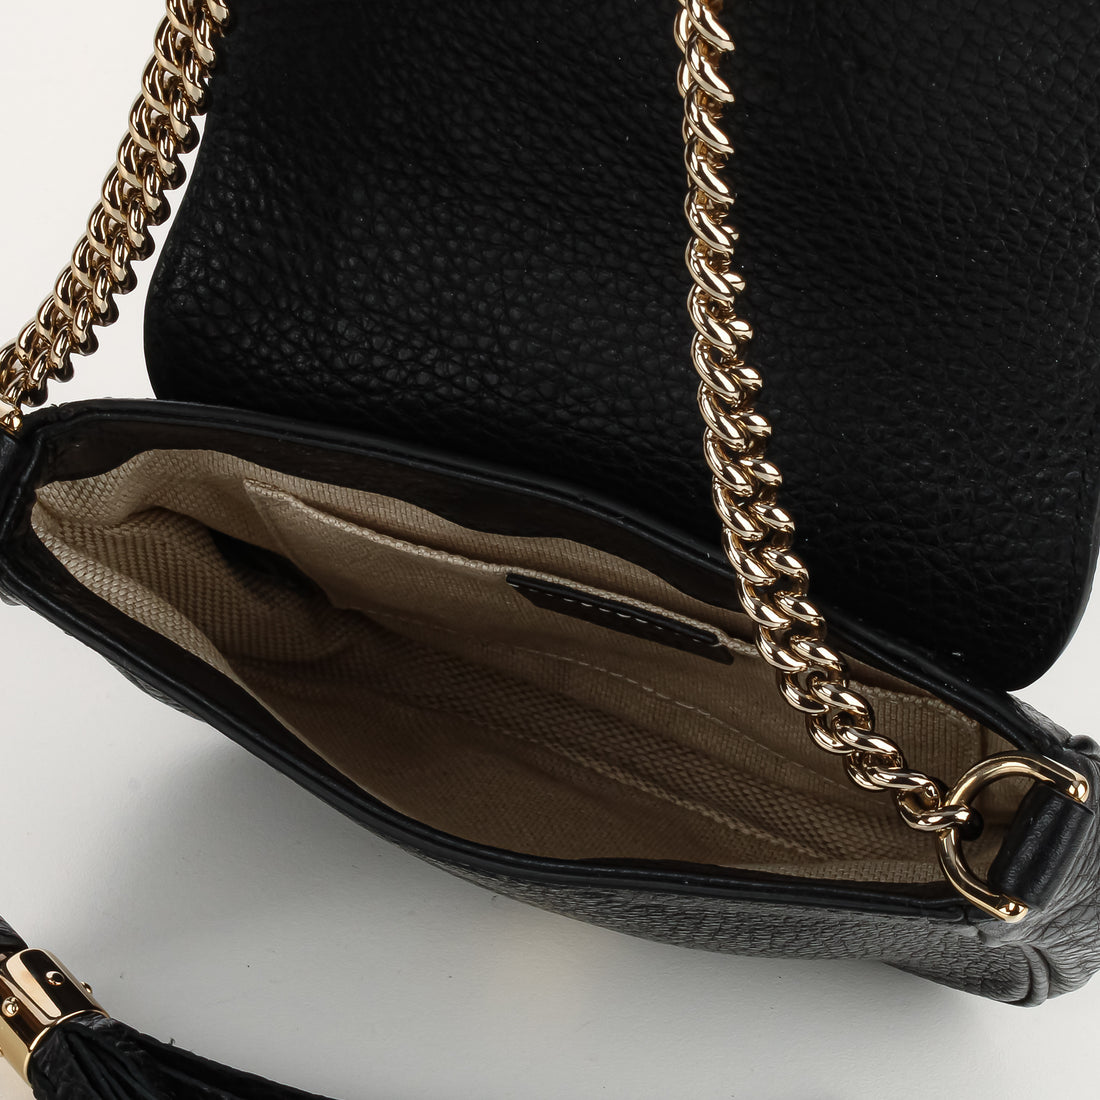 GUCCI Soho Flap Tassel Chain Shoulder Bag - Black Leather